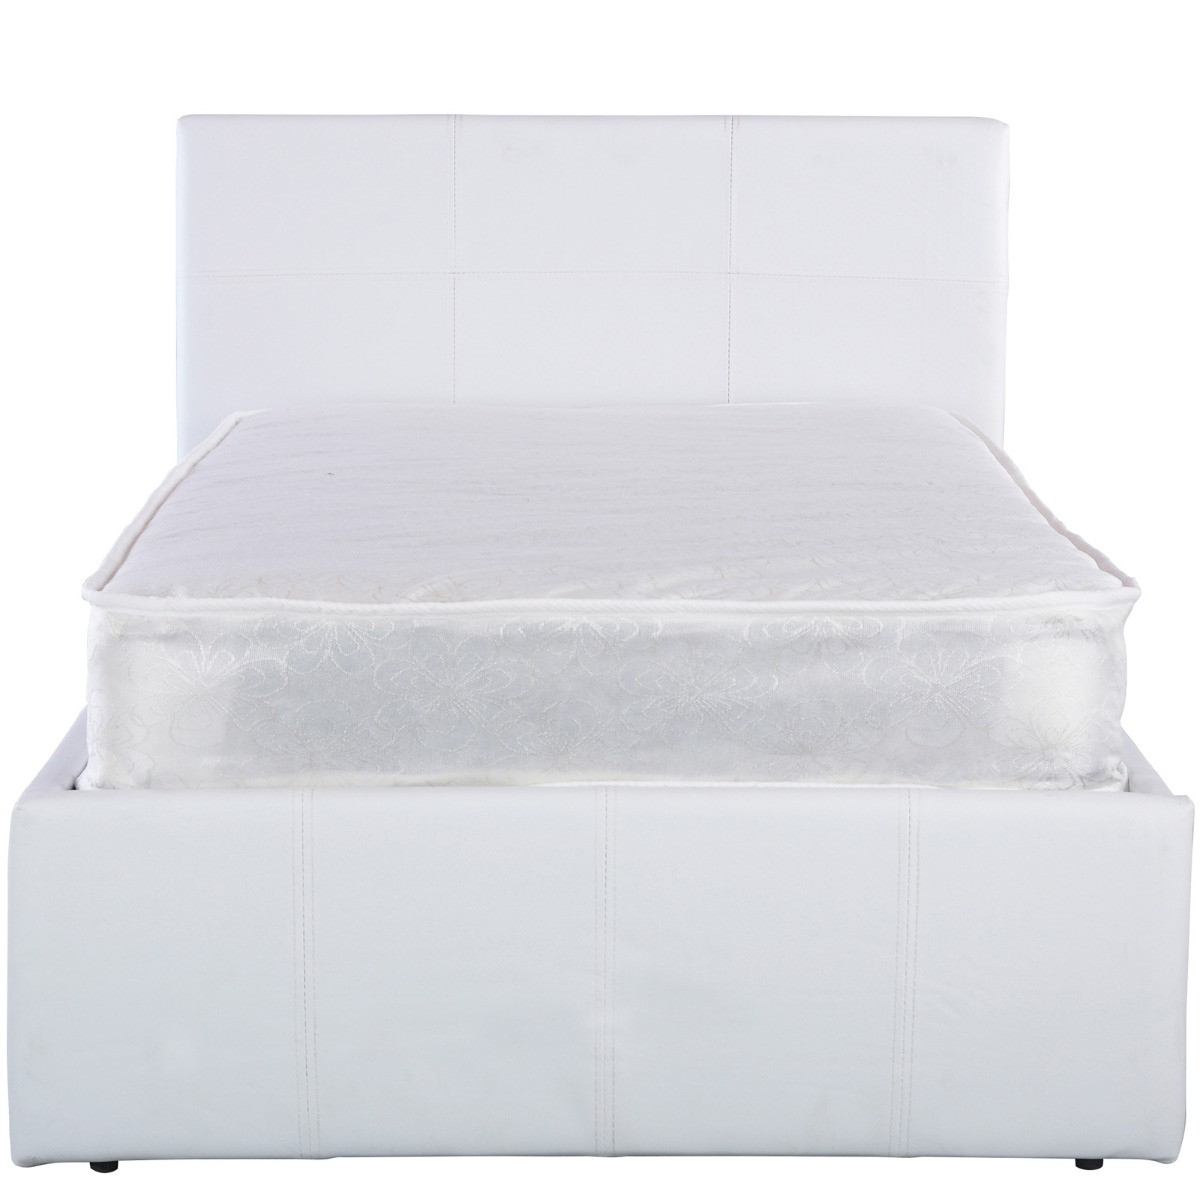 Side Lift Ottoman Storage Bed - White>